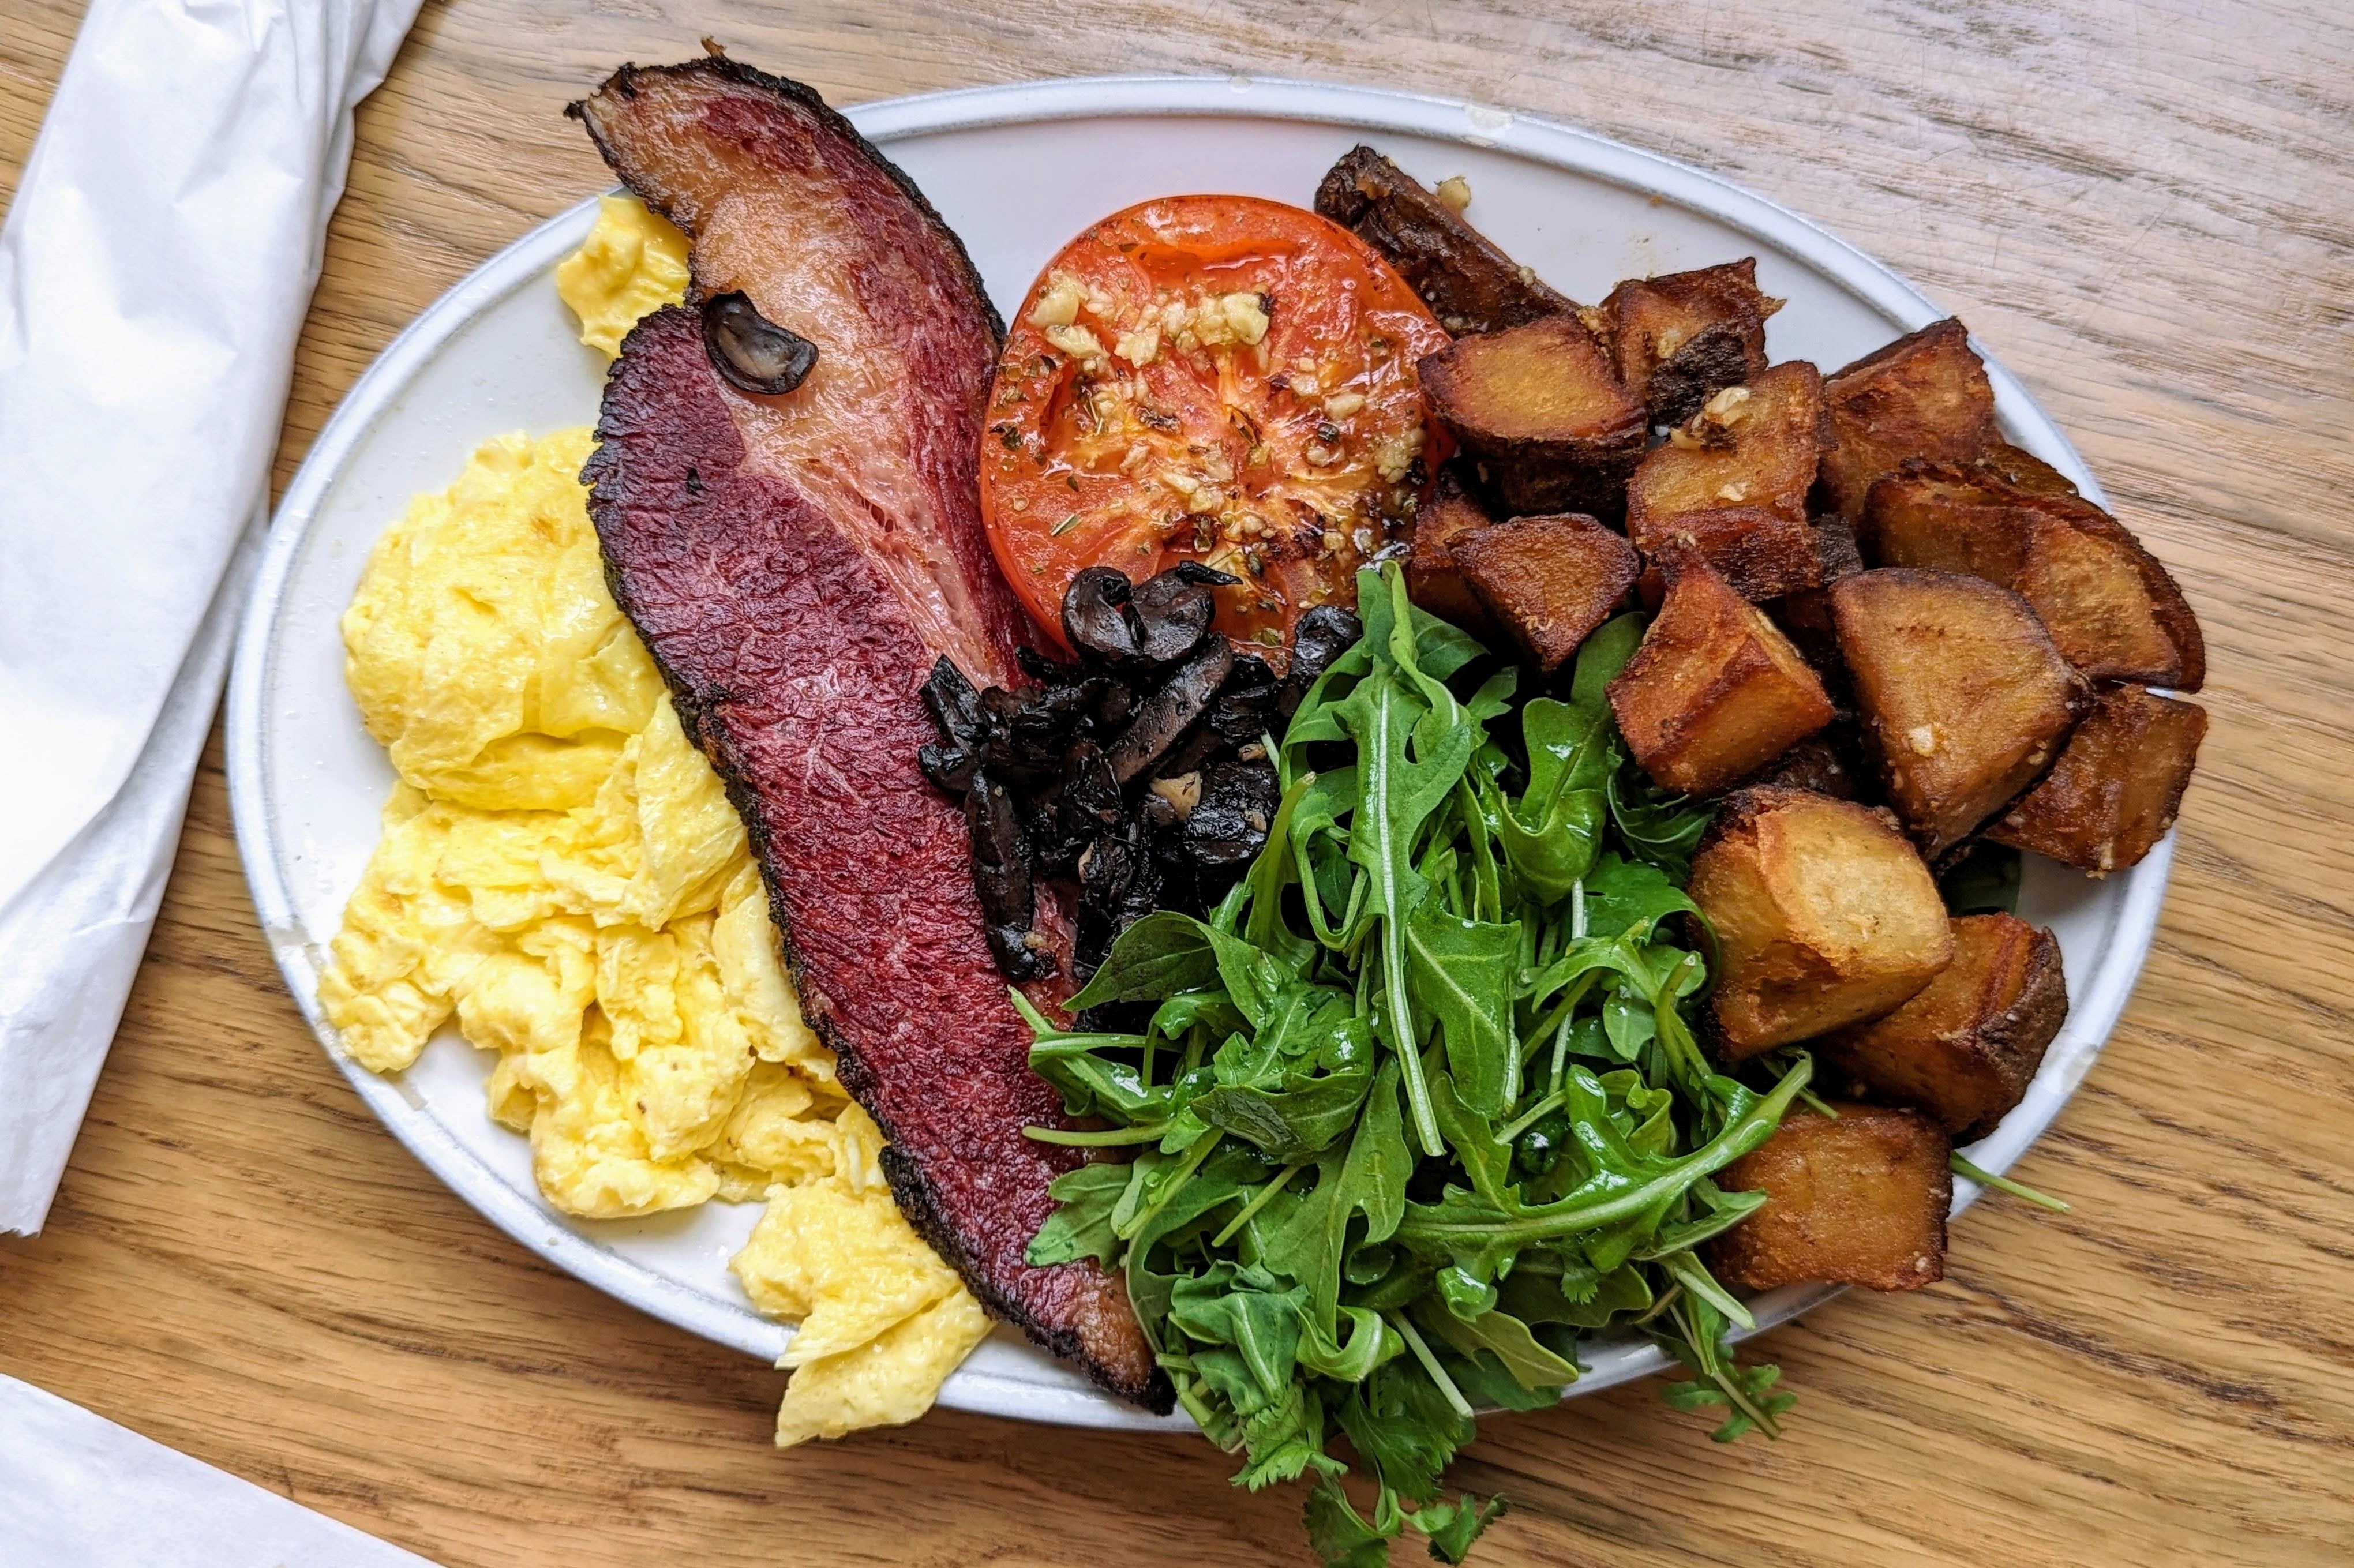 Breakfast plate with scrambled eggs, bacon, arugula, mushrooms, tomato, and potatoes